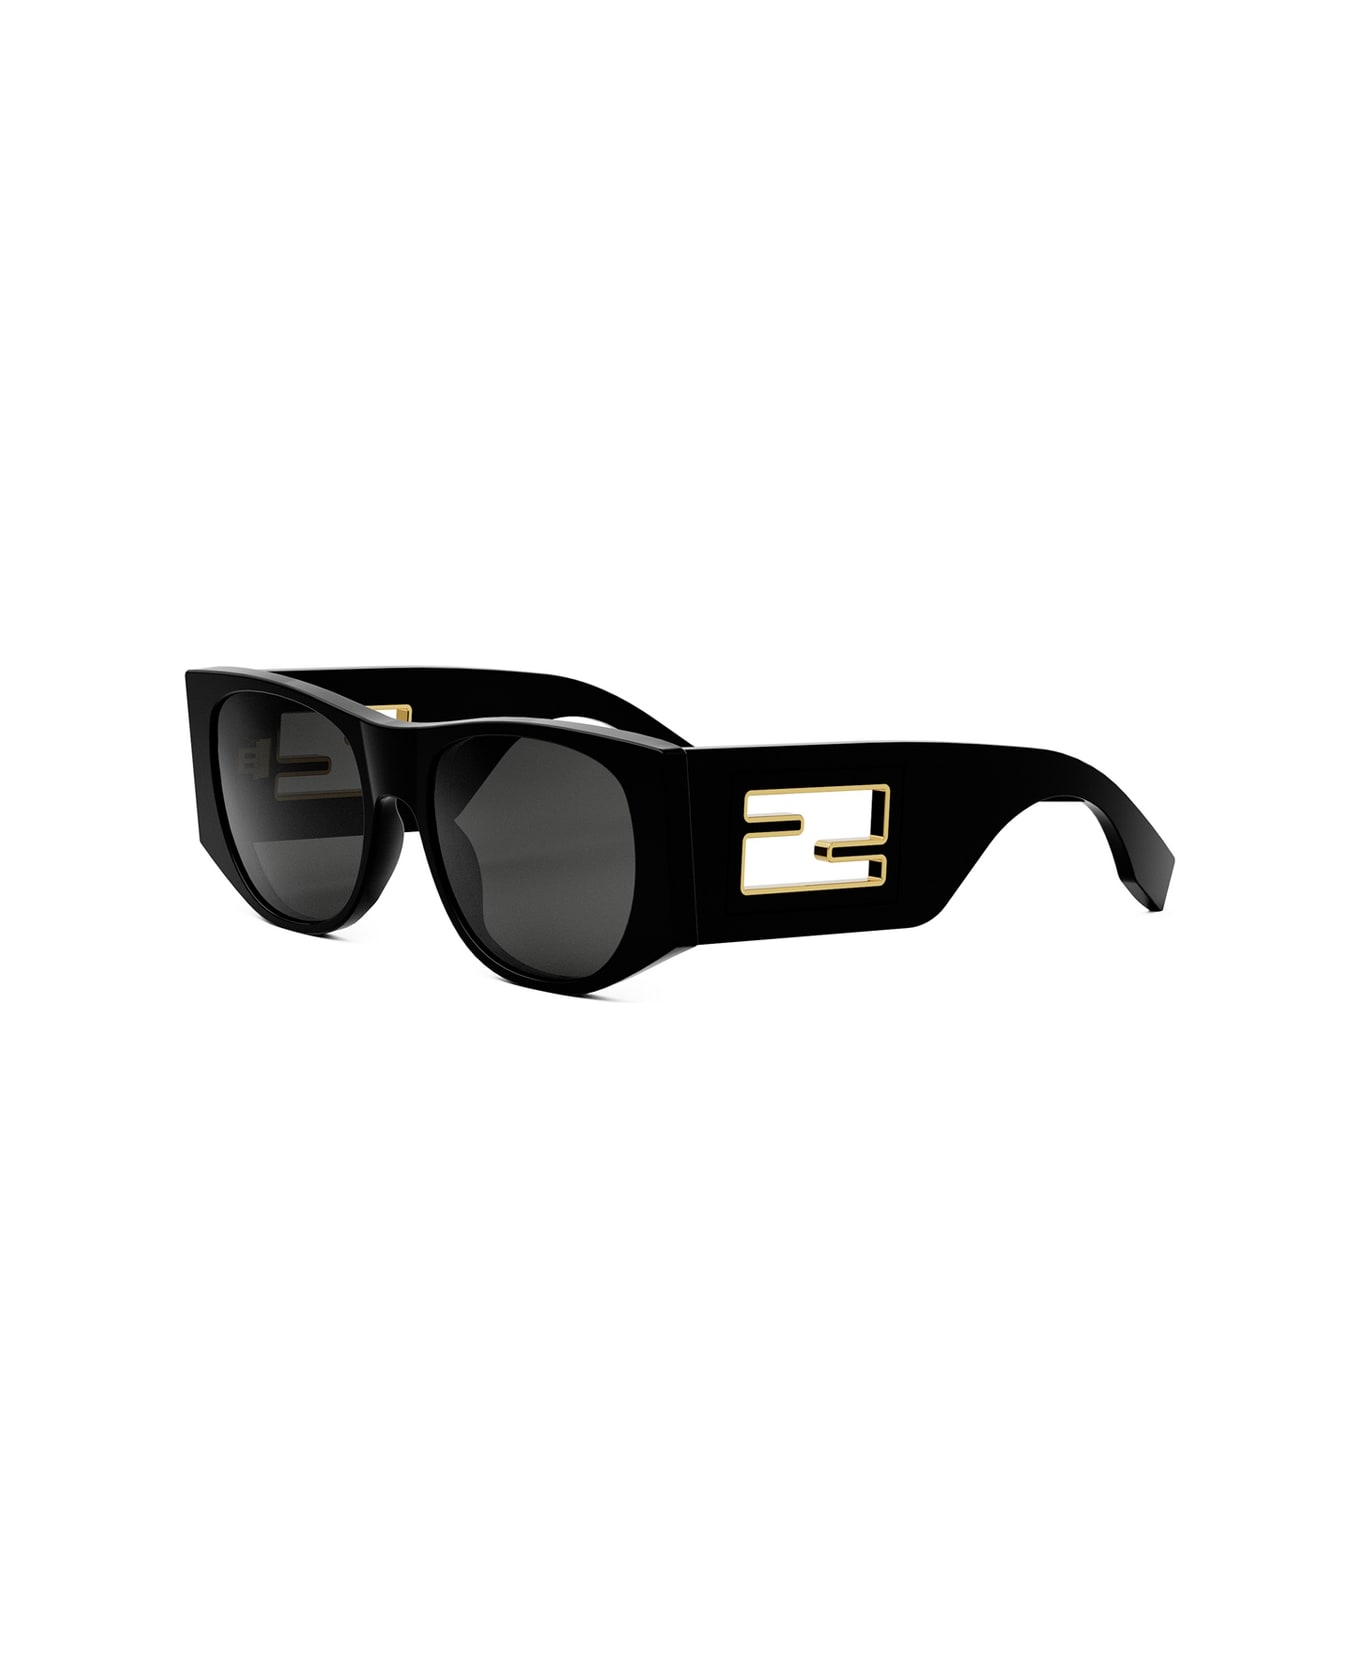 Fendi Eyewear Fe40109i 01a Sunglasses - Nero